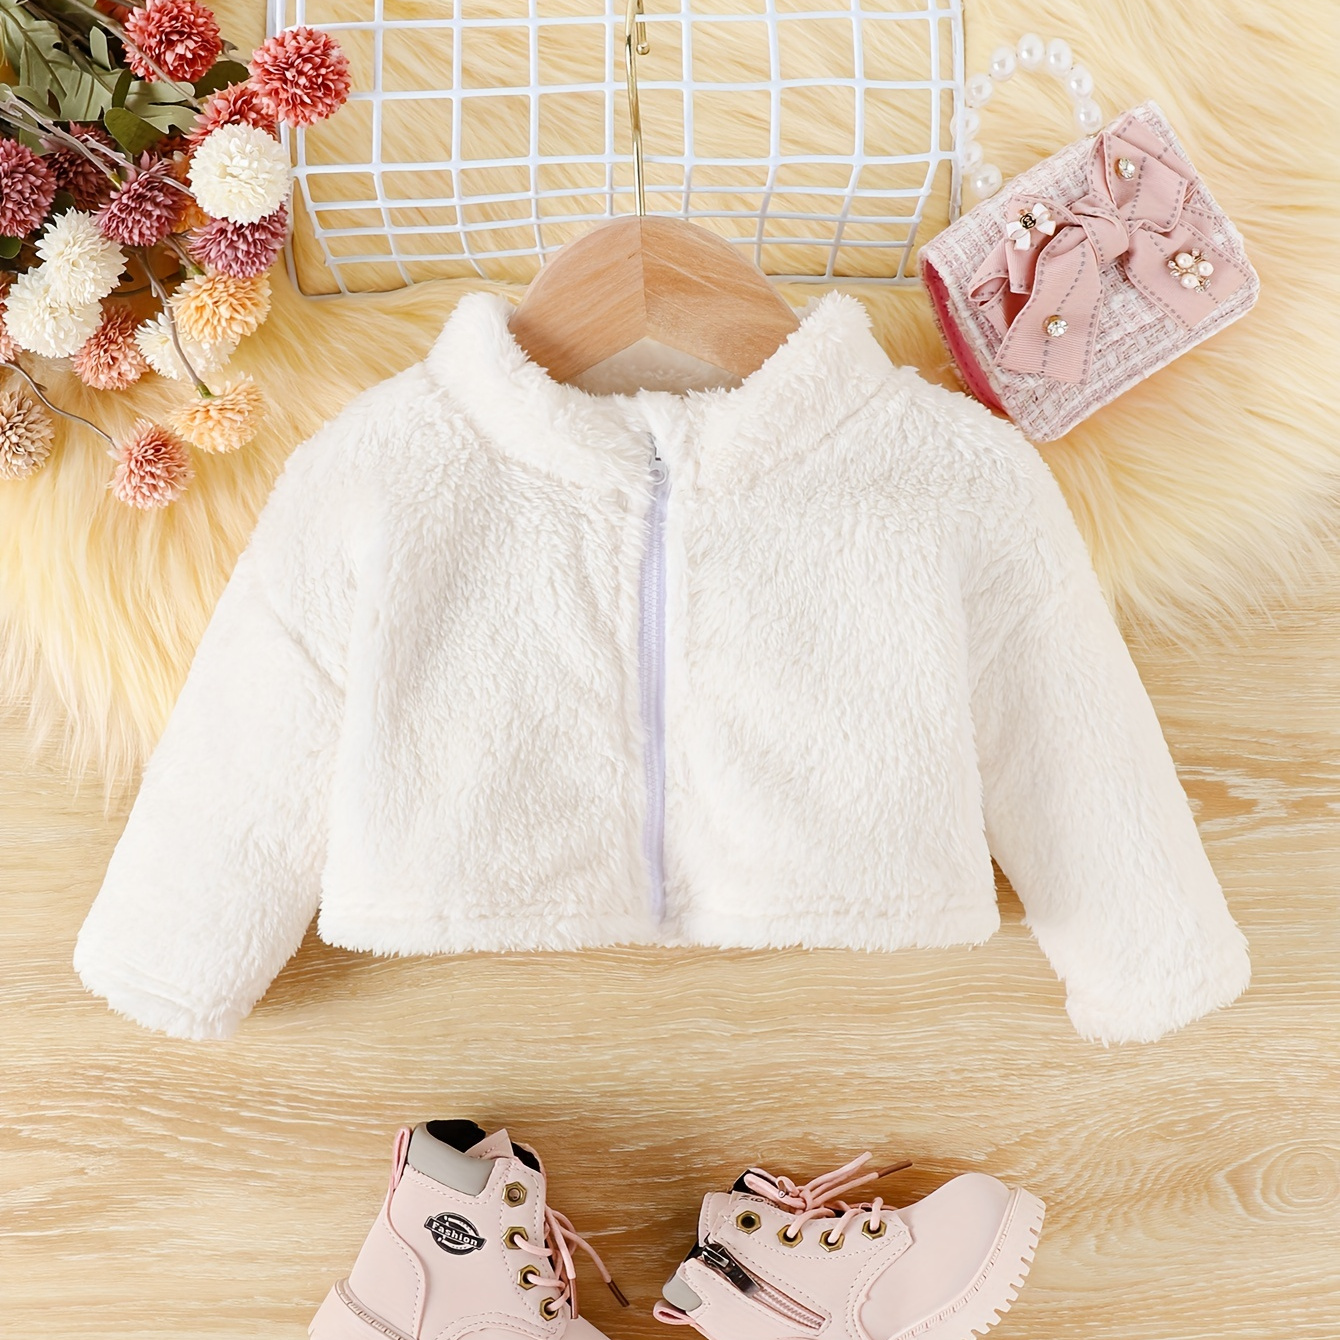 

Winter Windproof Plush Jacket, Stylish Stand Collar Baby Girls Autumn Winter Warm Coat, Cozy Cute Zipper Top